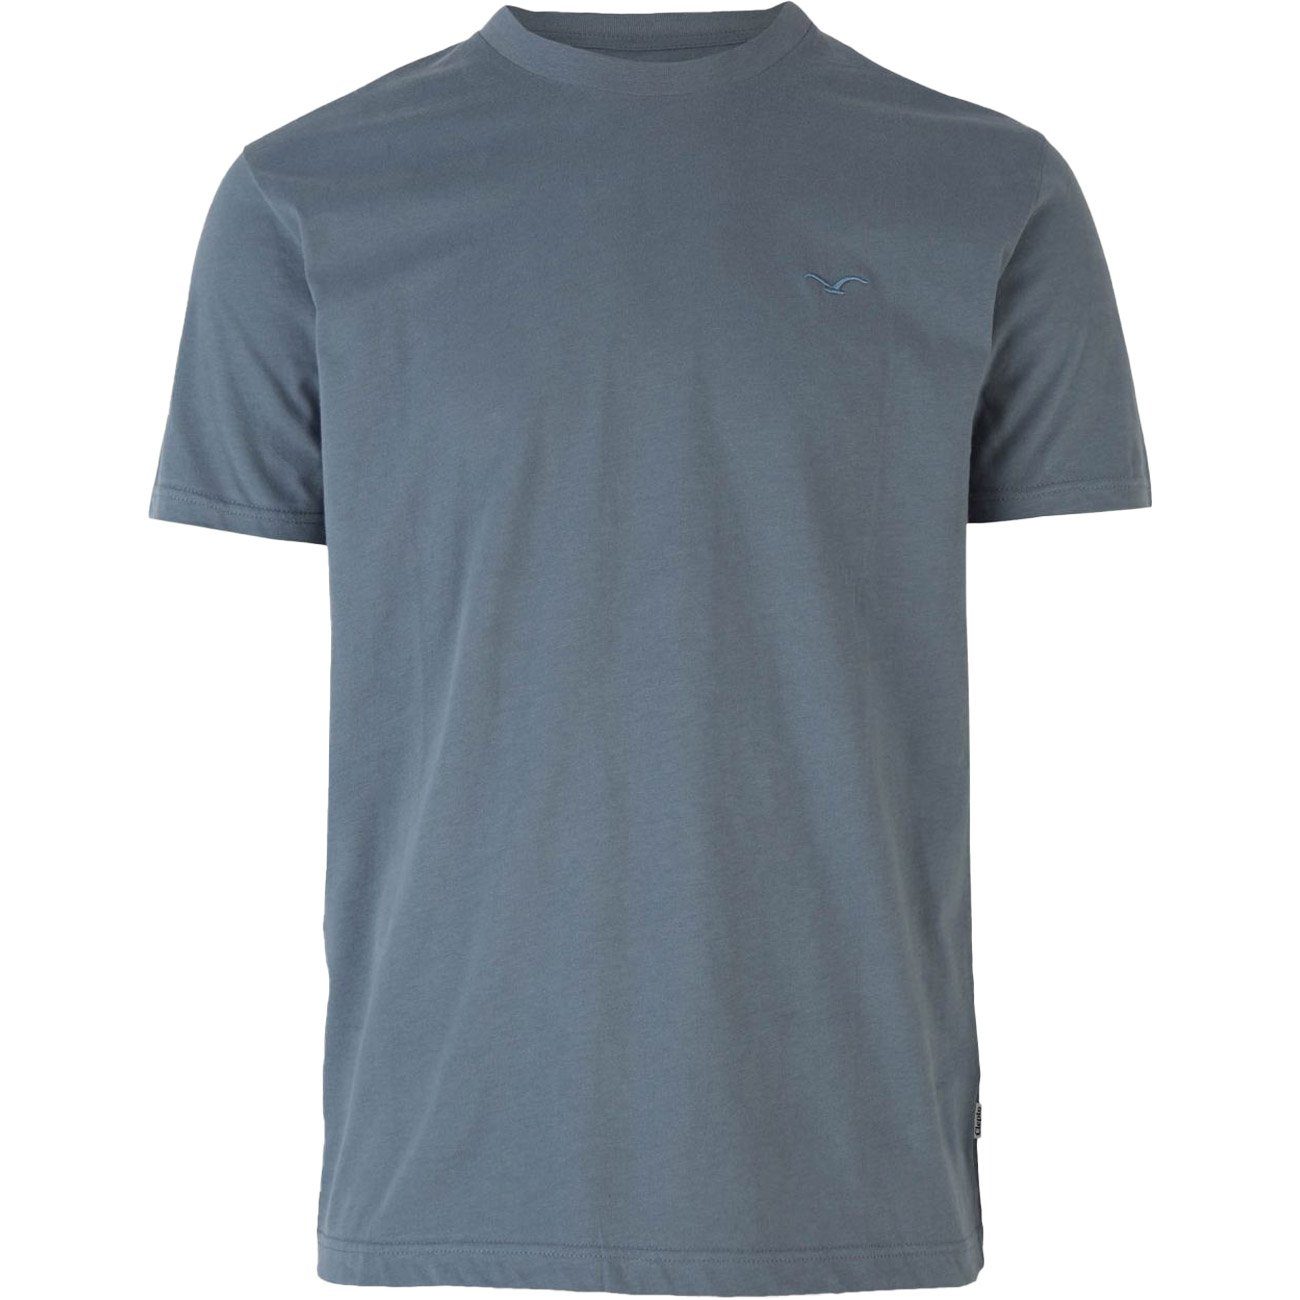 Cleptomanicx T-Shirt Ligull Regular blue graphite | T-Shirts